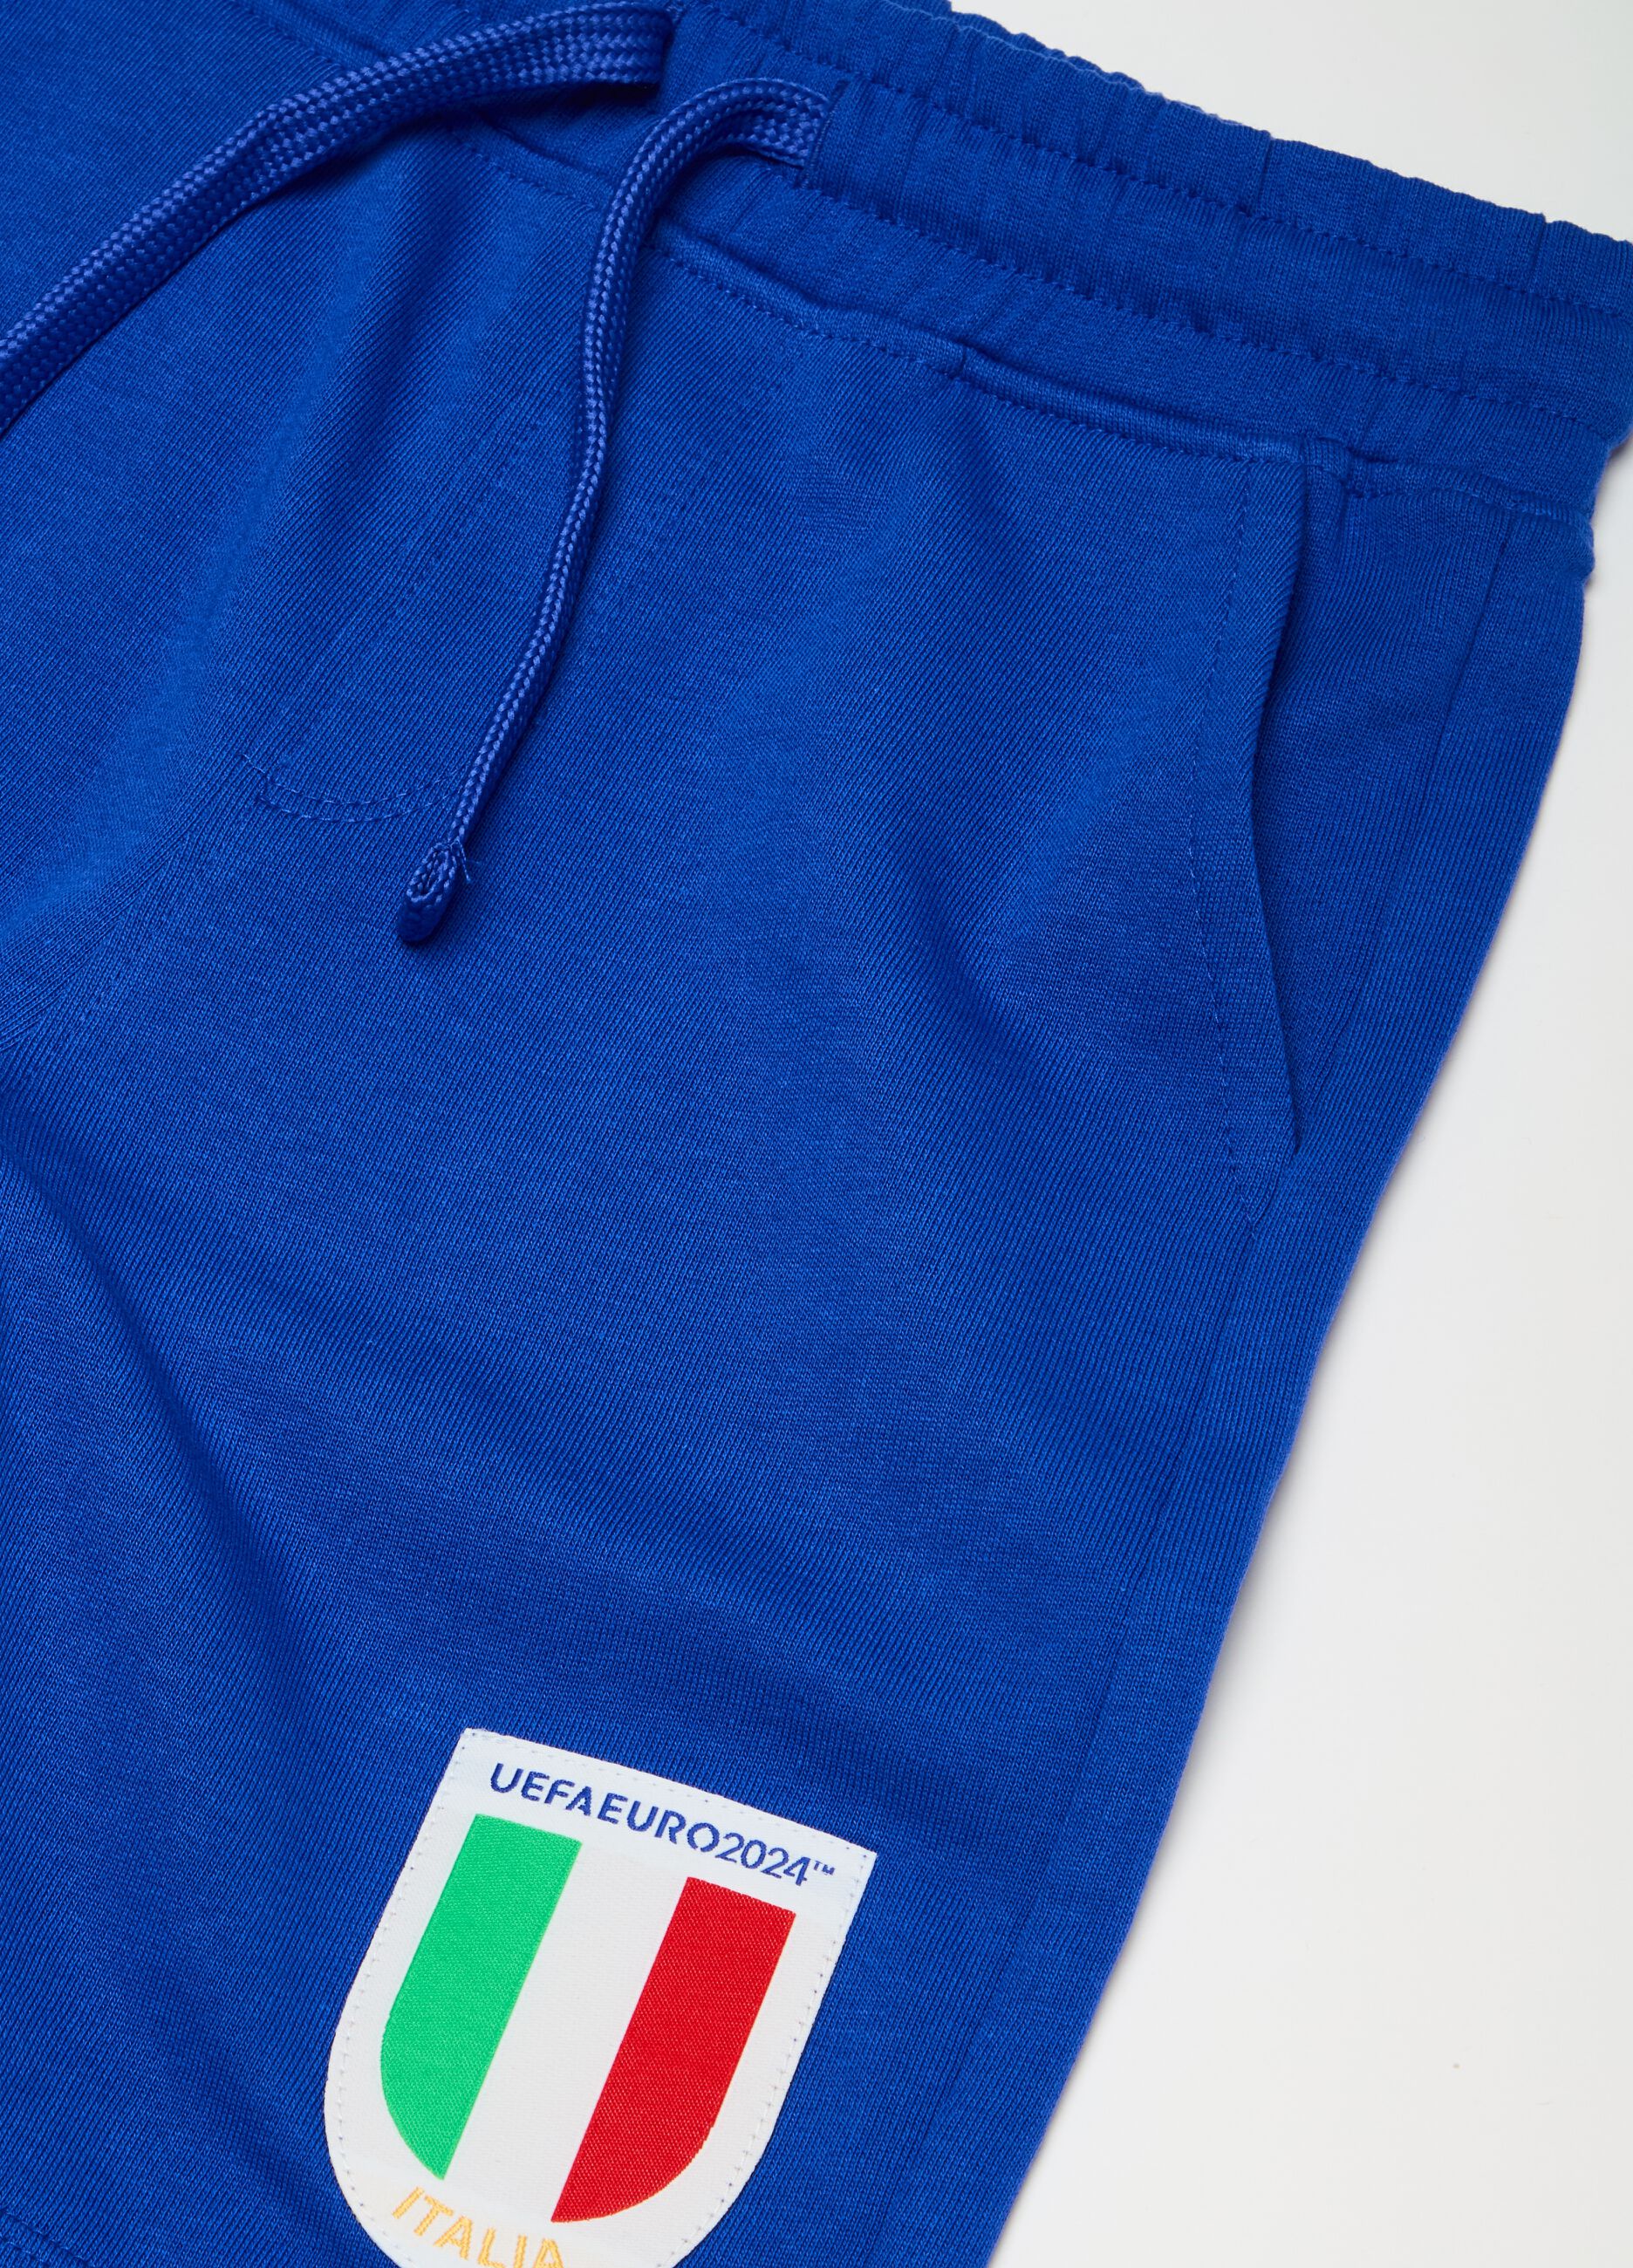 UEFA Euro 2024 Italy jogging set in cotton